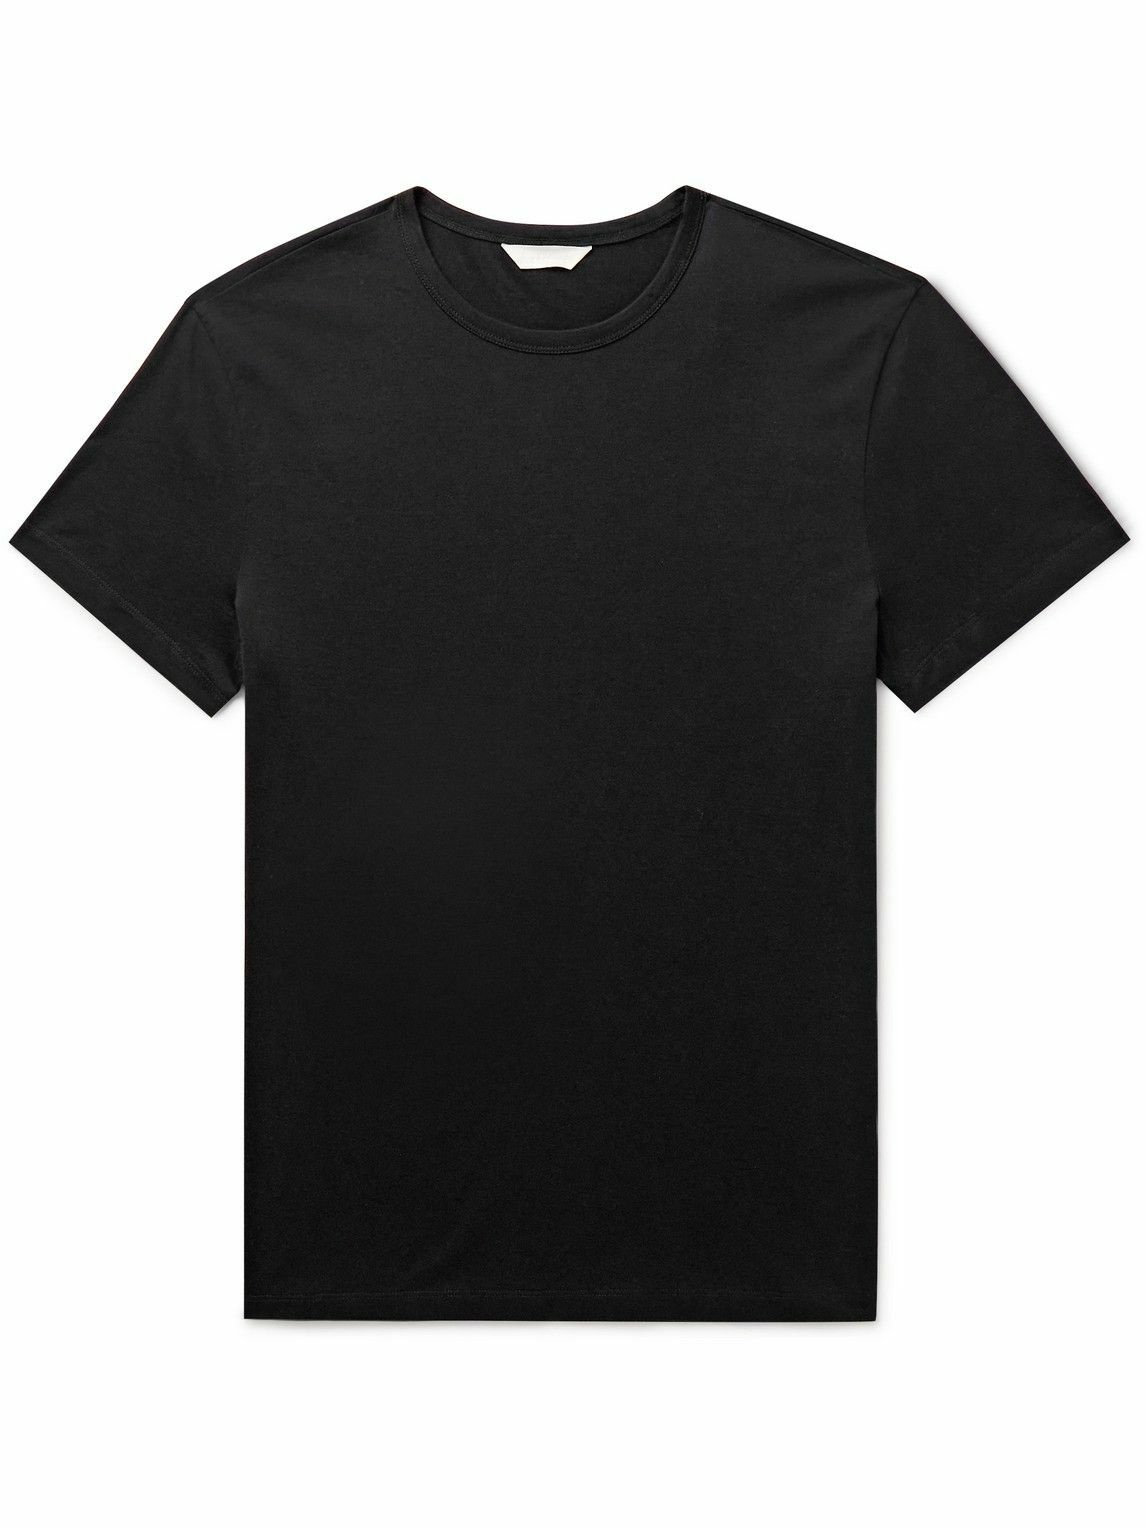 Club Monaco - Luxe Pima Cotton-Jersey T-Shirt - Black Club Monaco